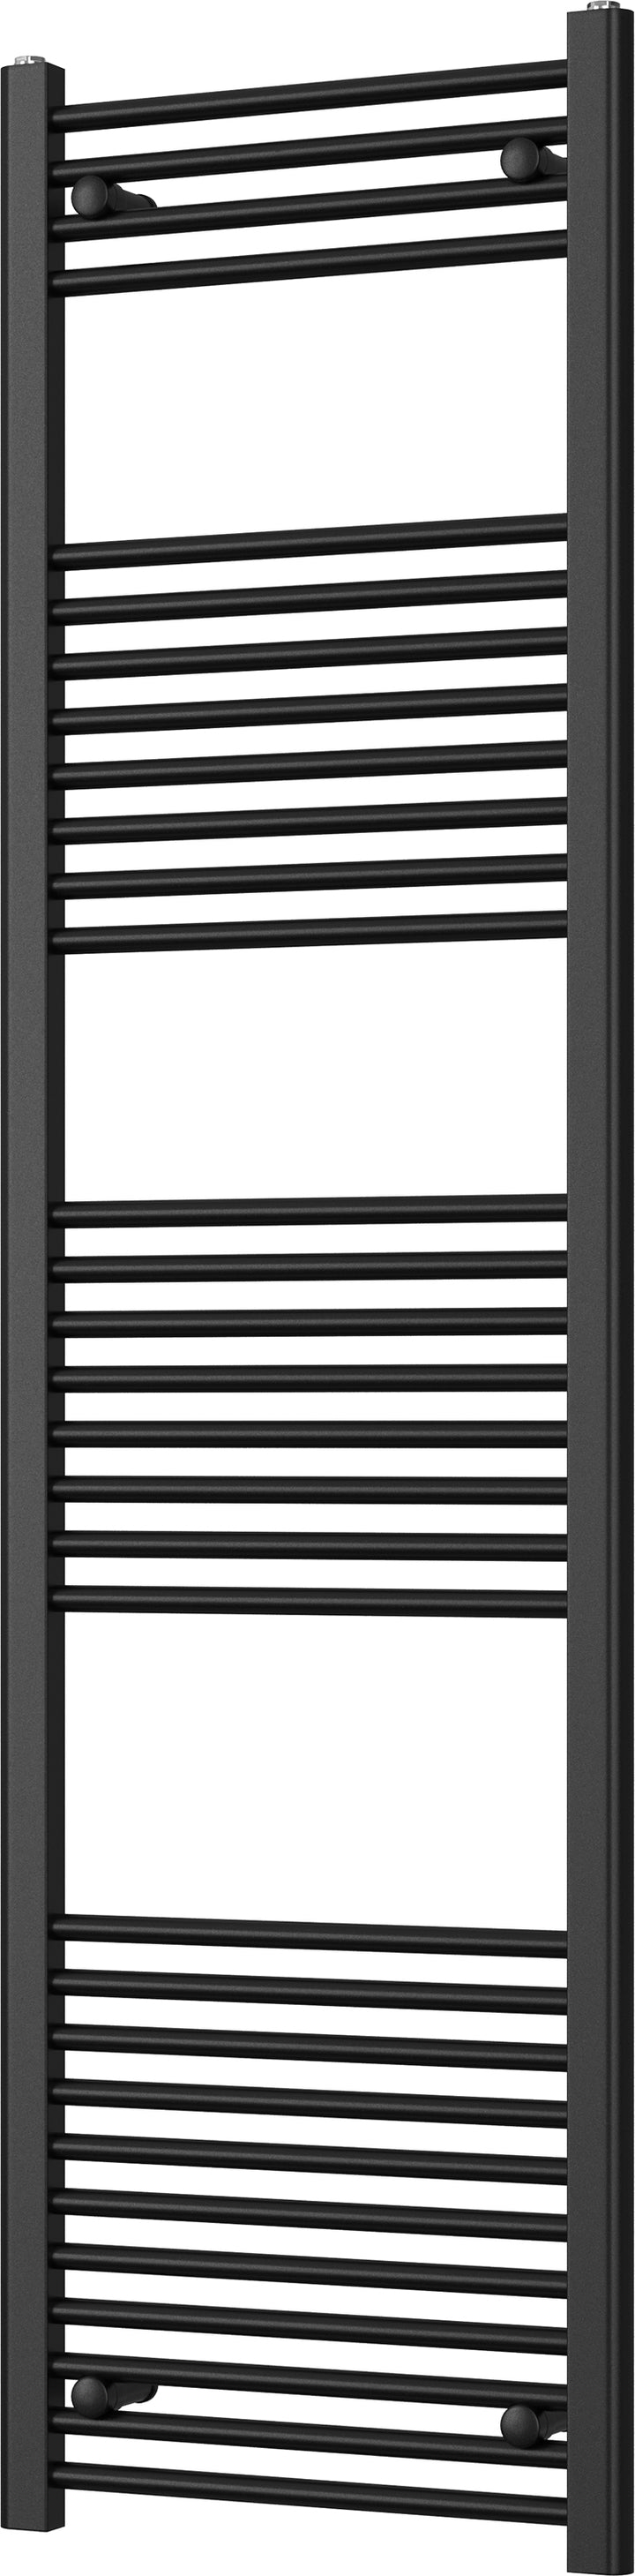 Zennor - Black Heated Towel Rail - H1800mm x W500mm - Straight